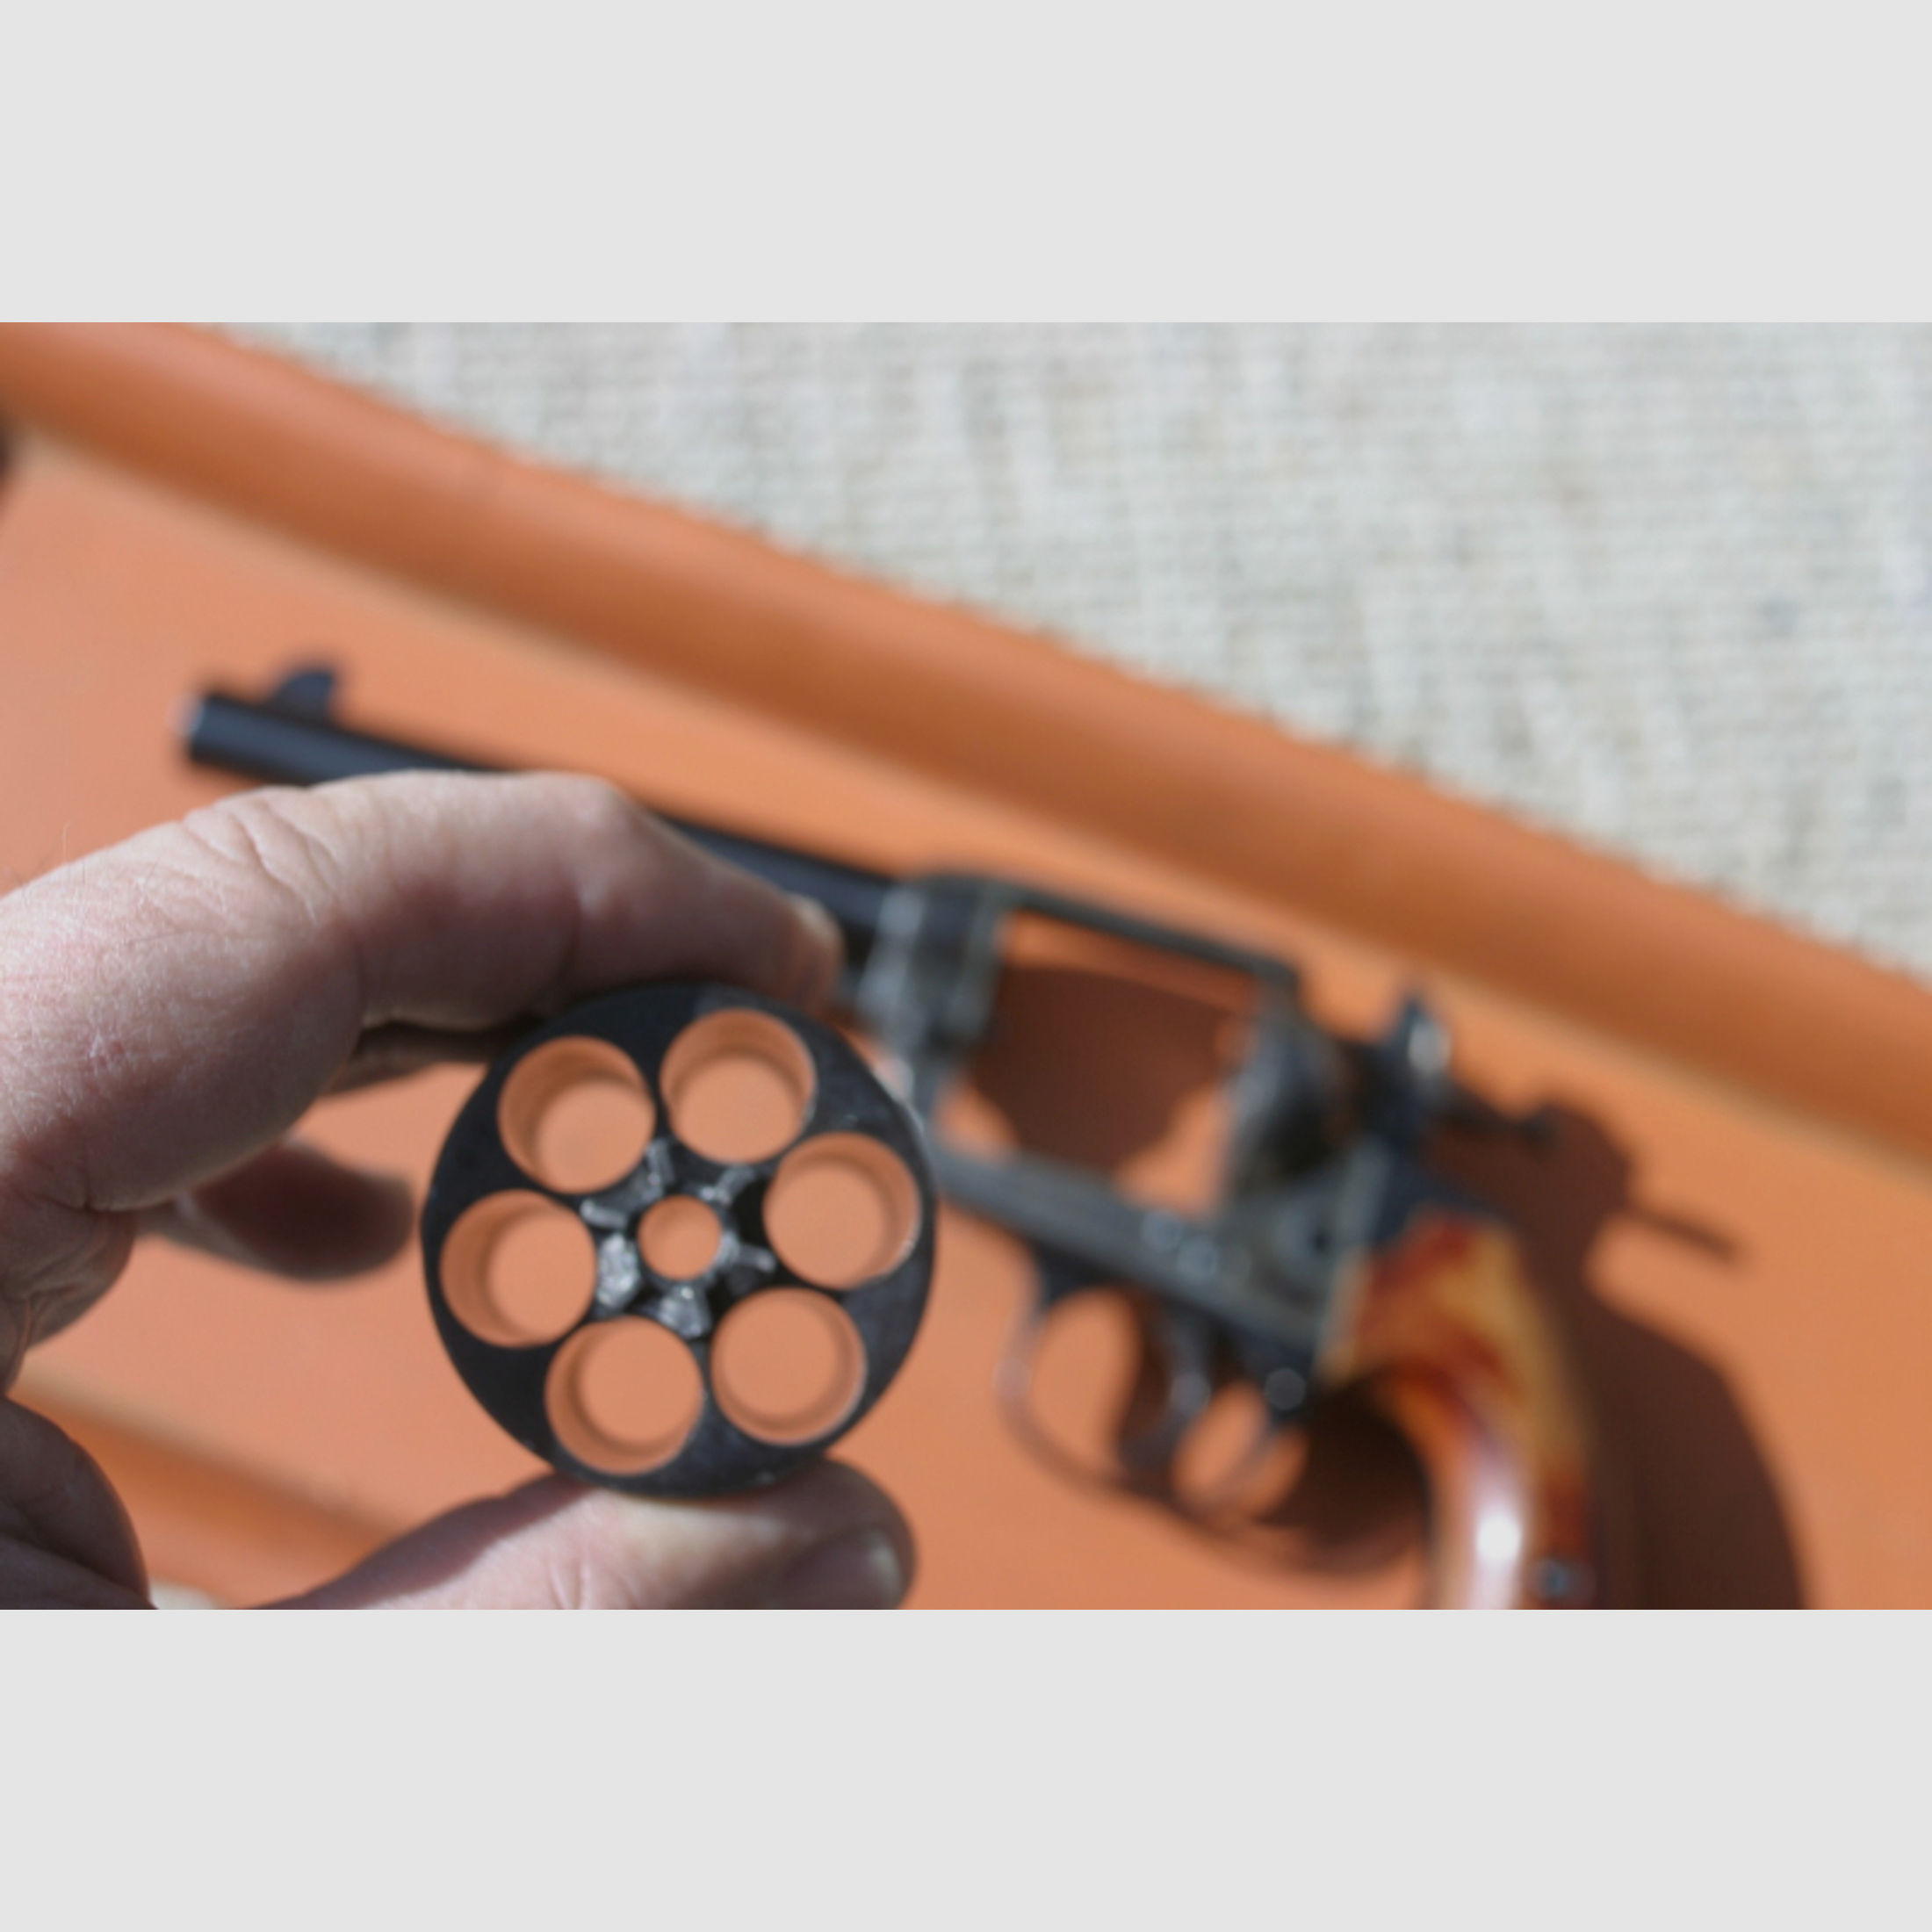 SAA-Revolver Hege-Uberti in .45LC mit Bisley-Griff